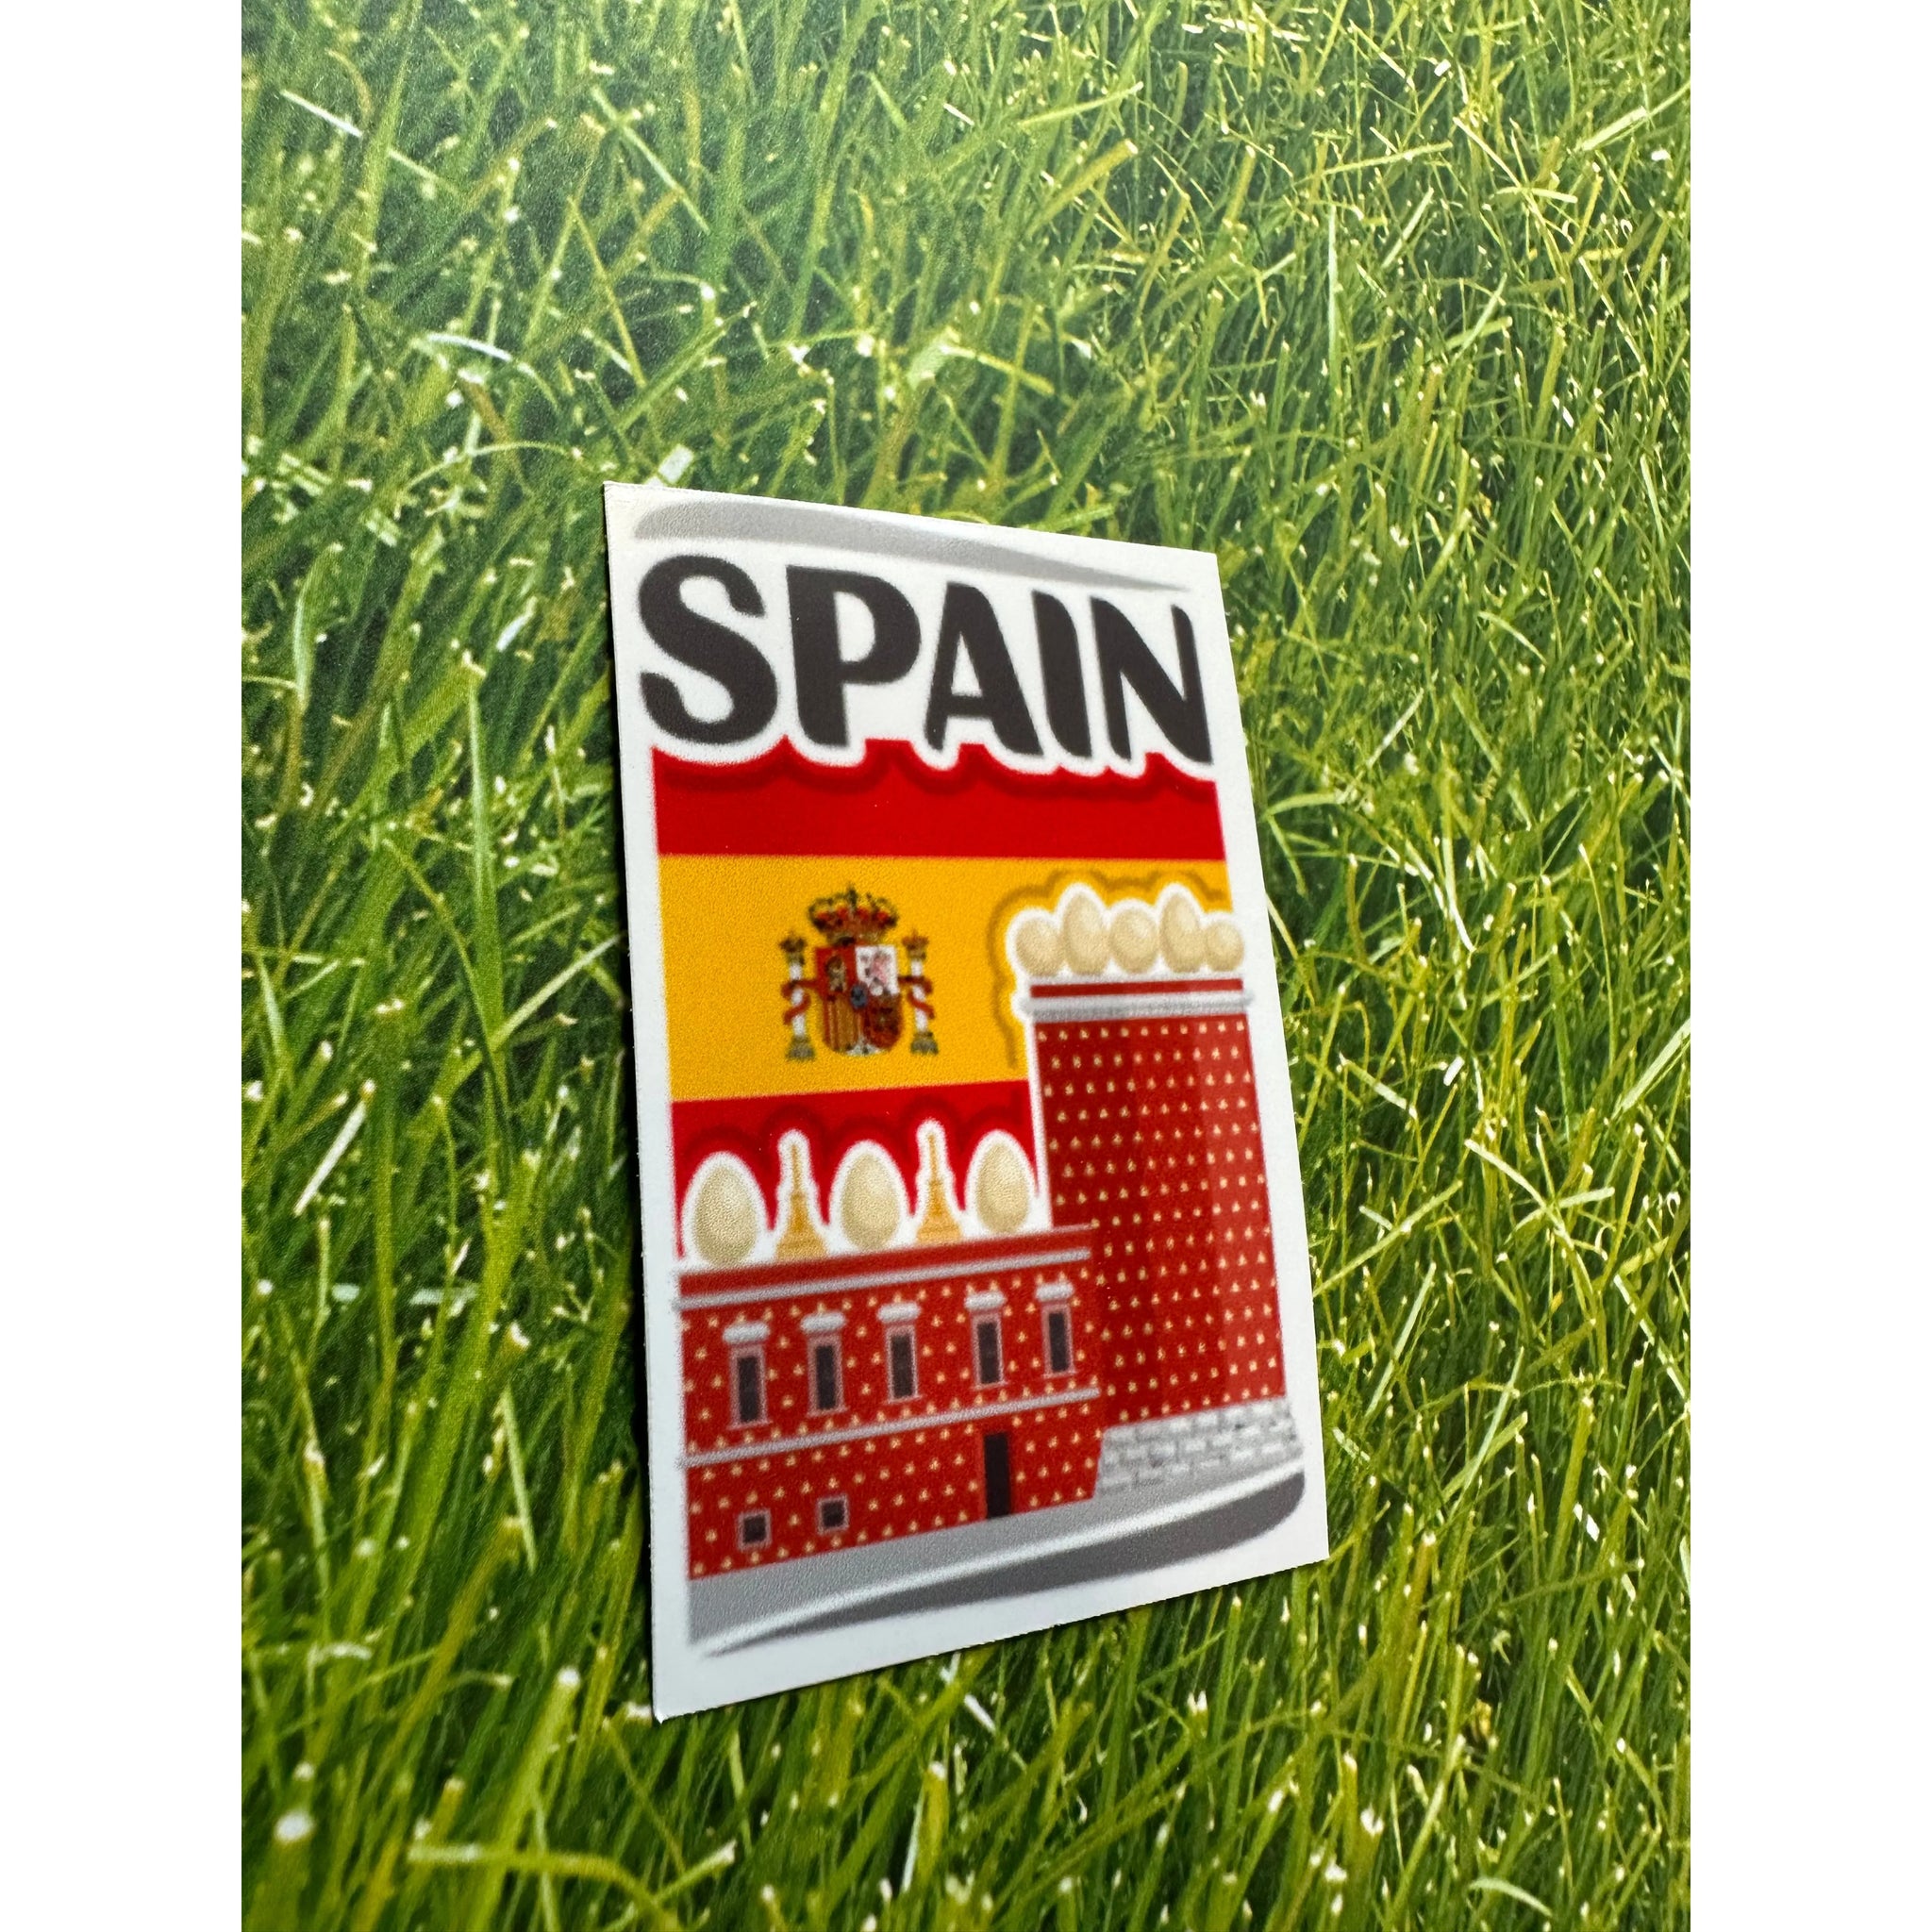 Spain Vinyl Decal Sticker - The European Gift Store